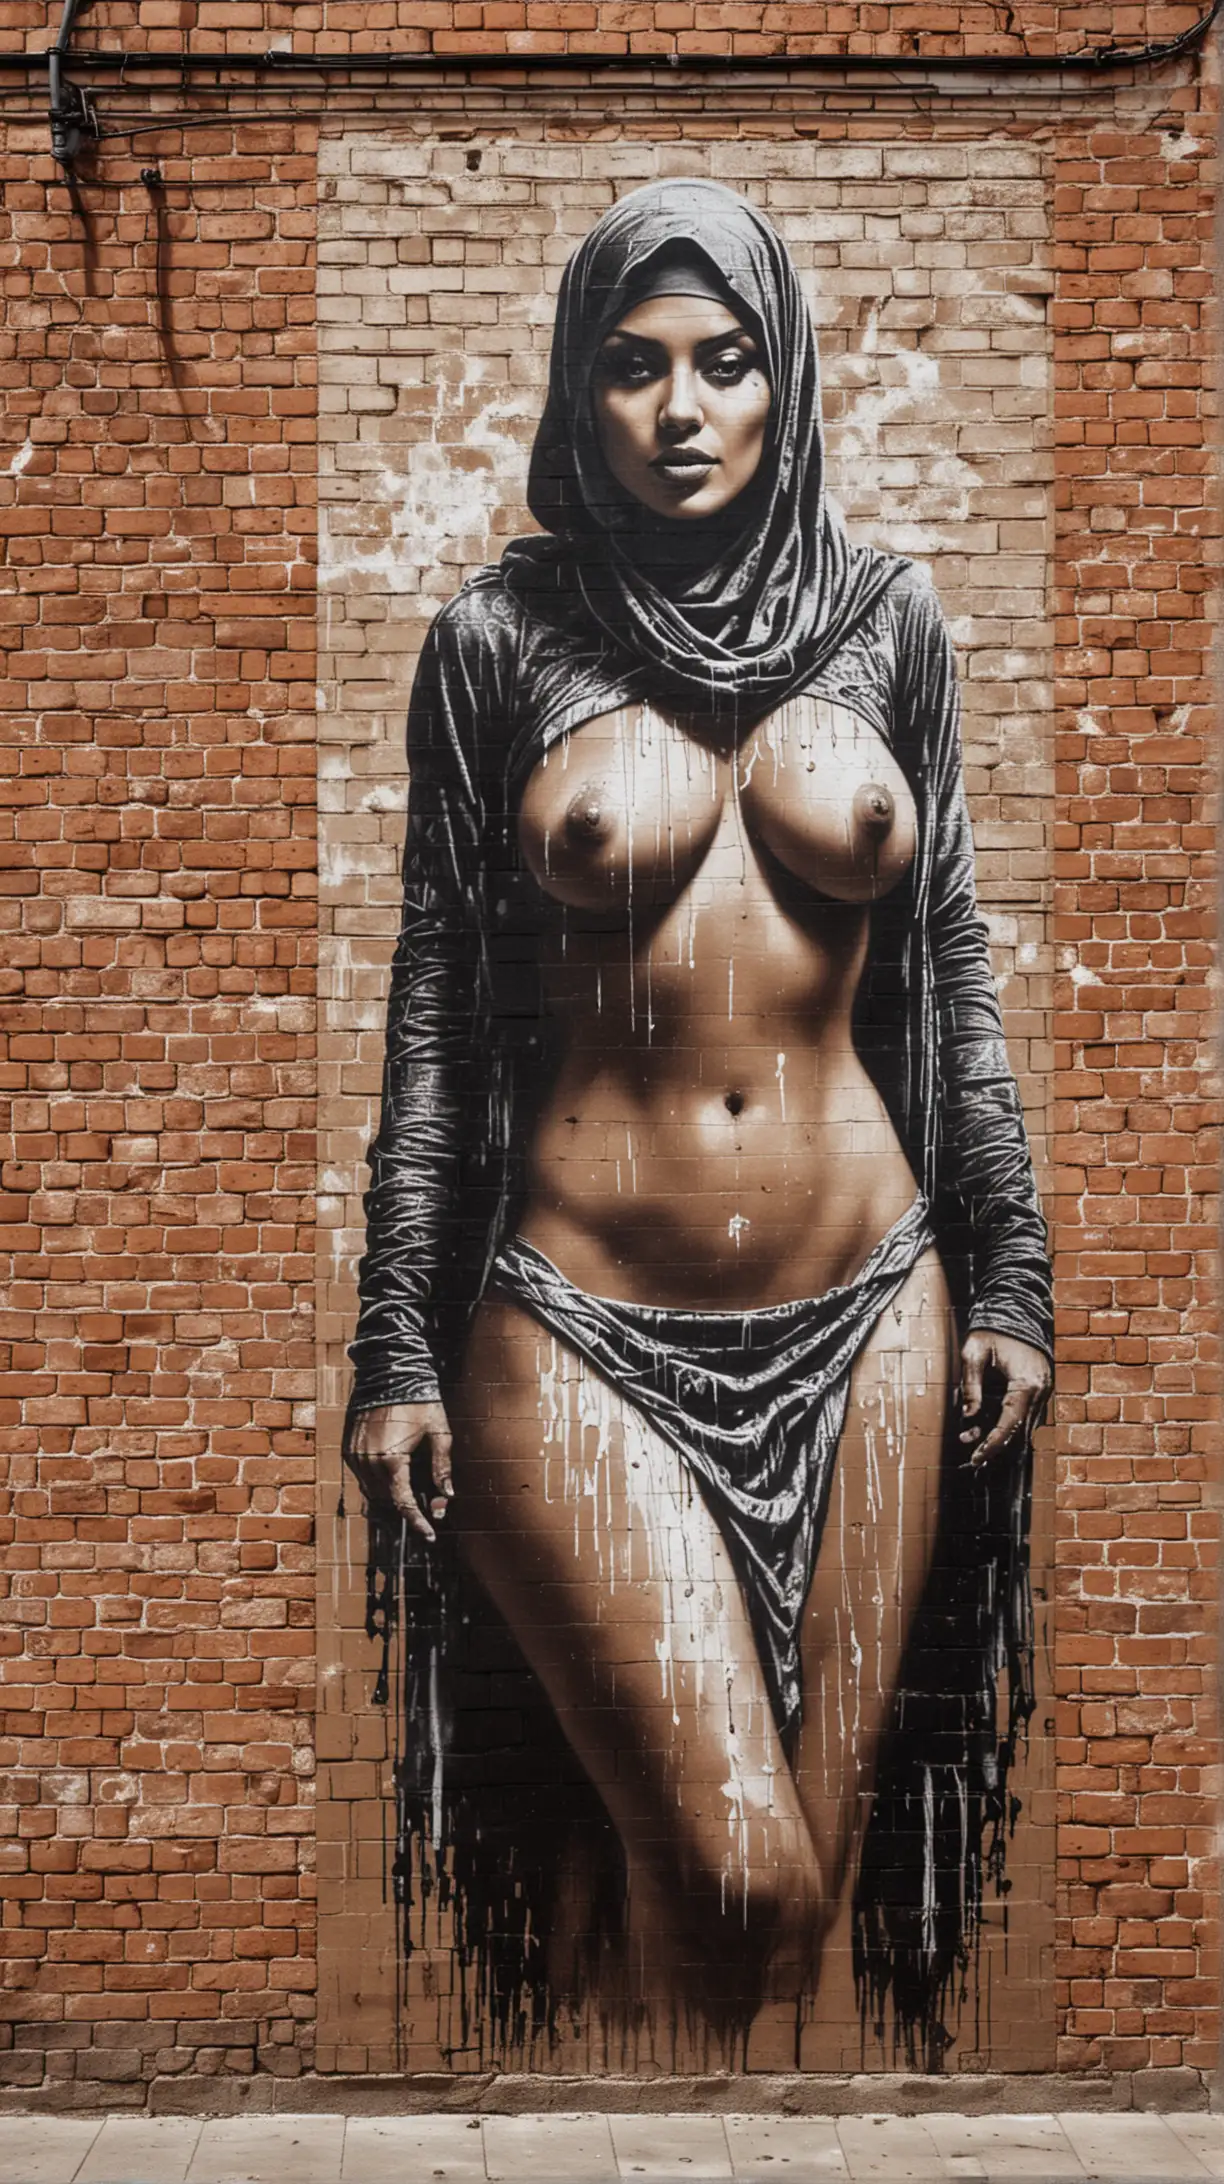 Urban Graffiti Art Provocative Nude Pinup in Burqa on Brick Wall